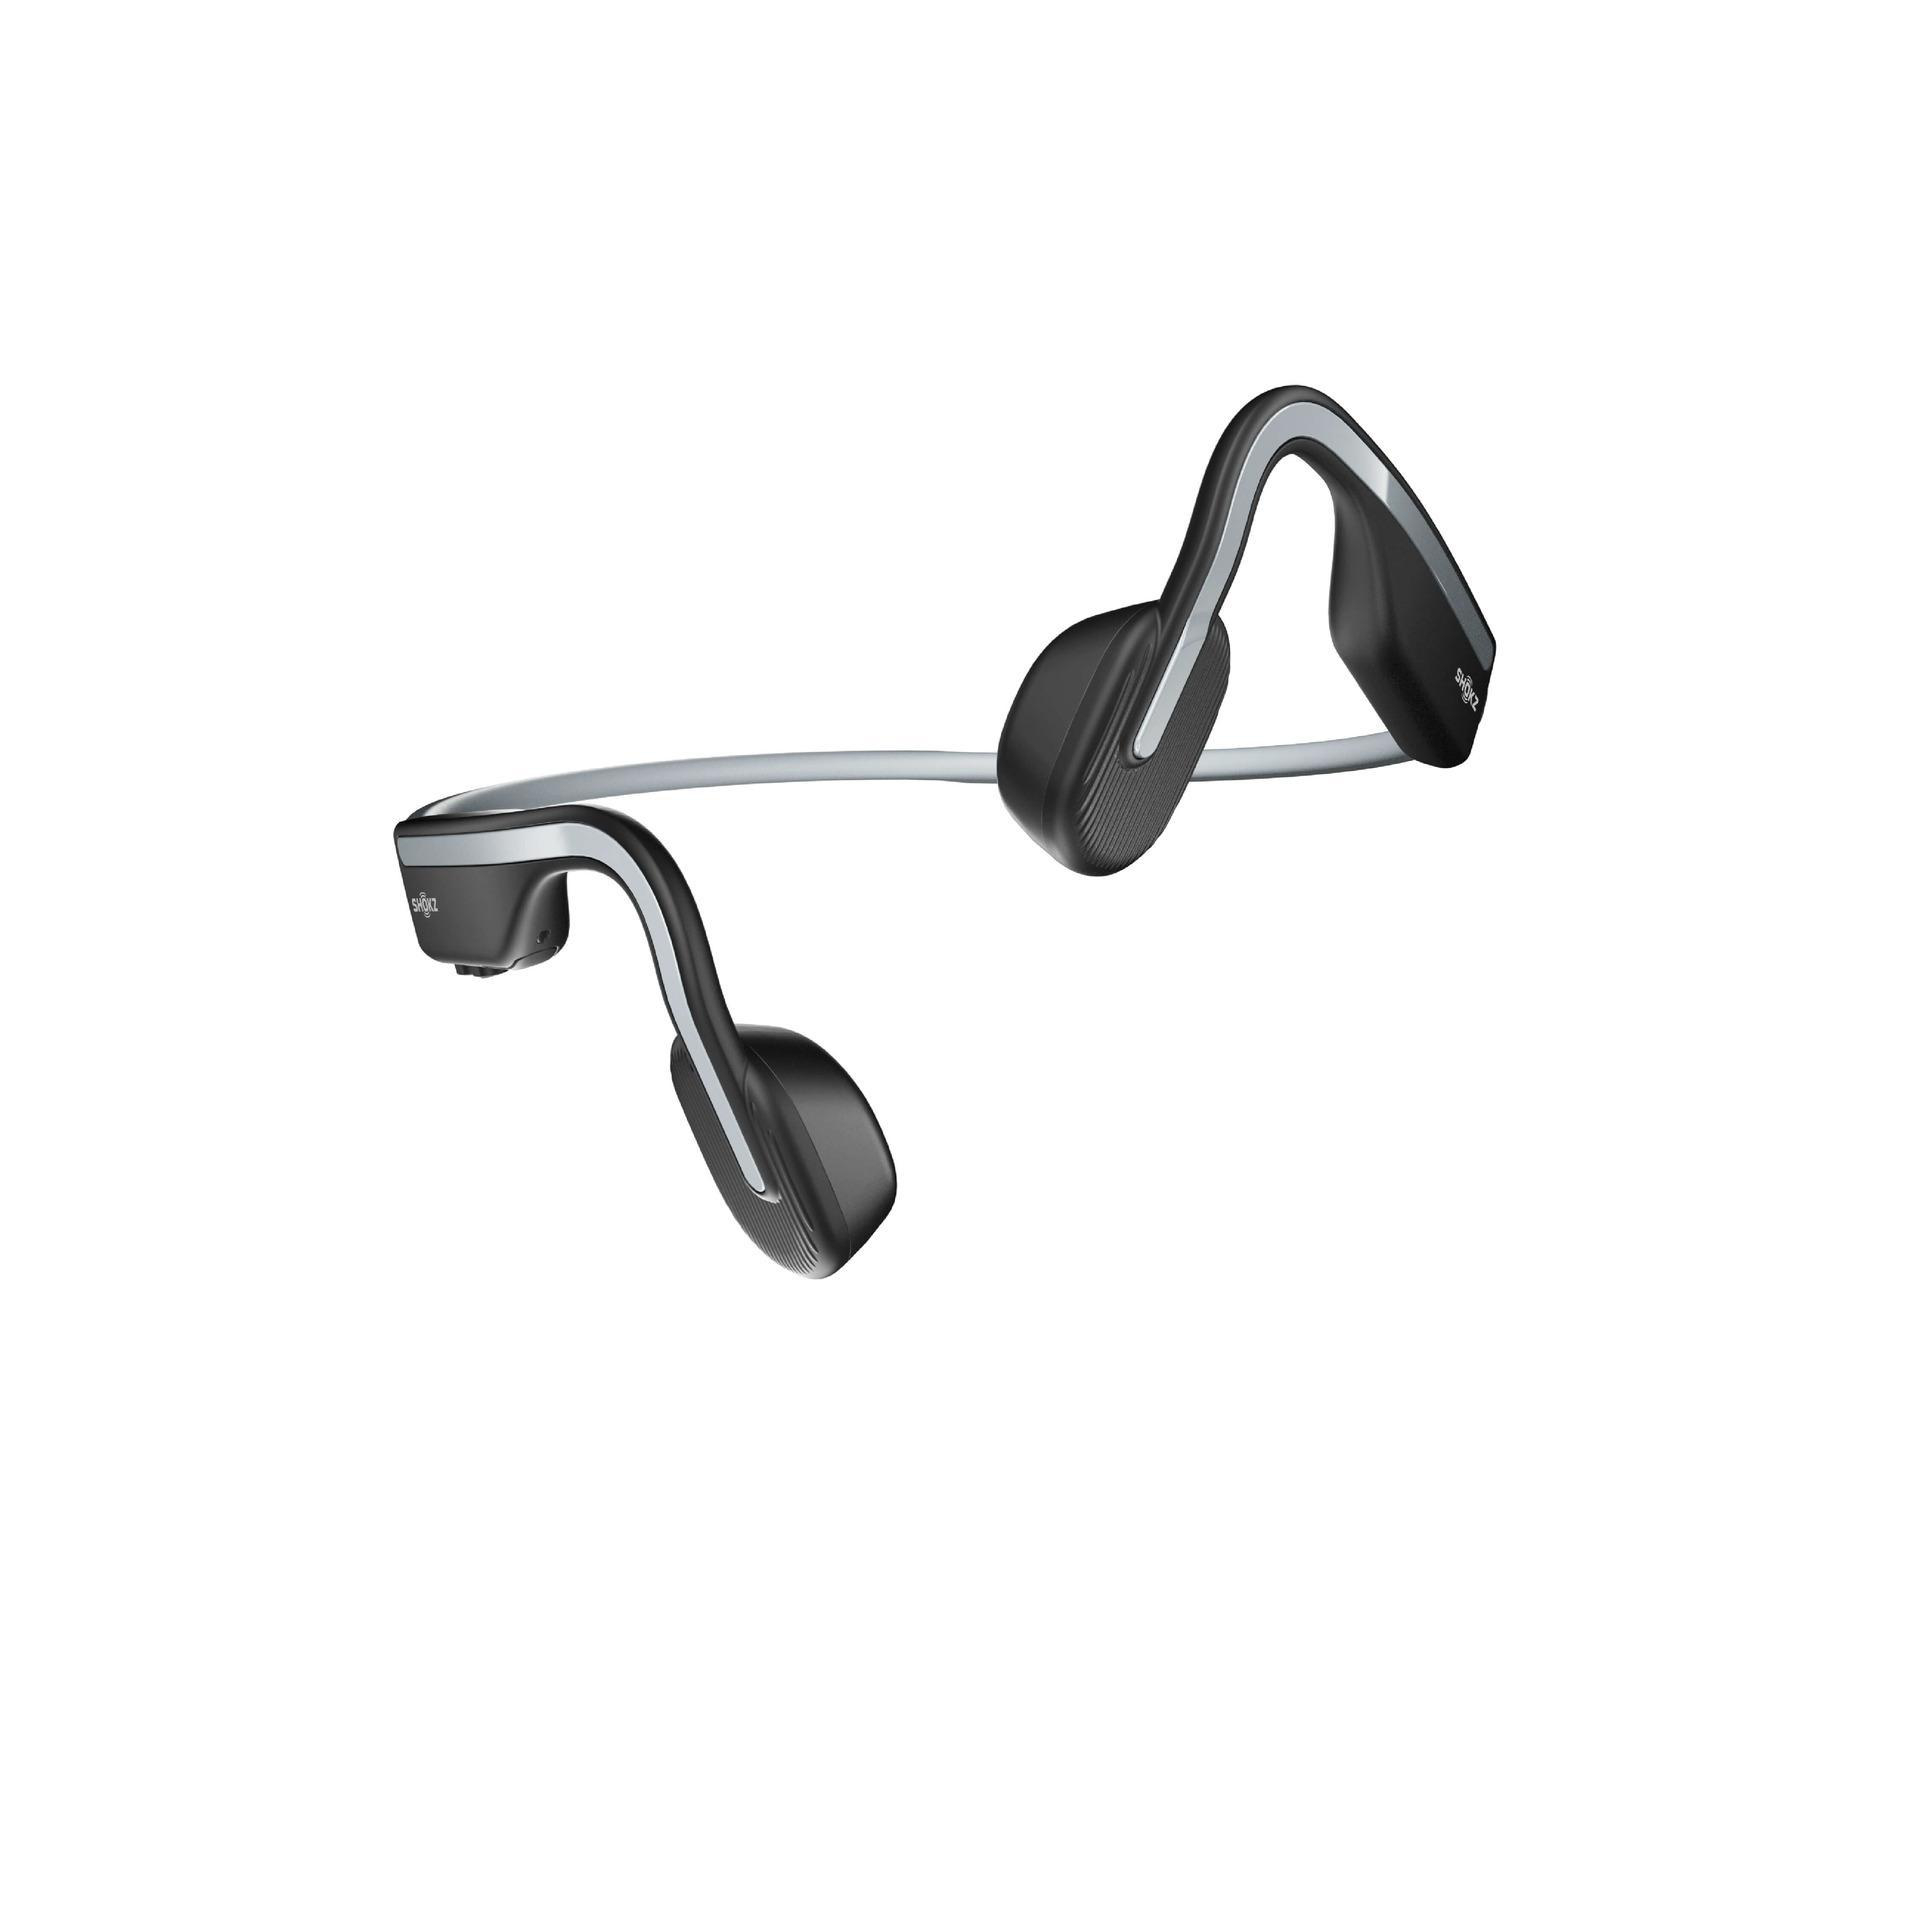 SHOKZ OpenMove, Bluetooth Open-ear Grau Kopfhörer